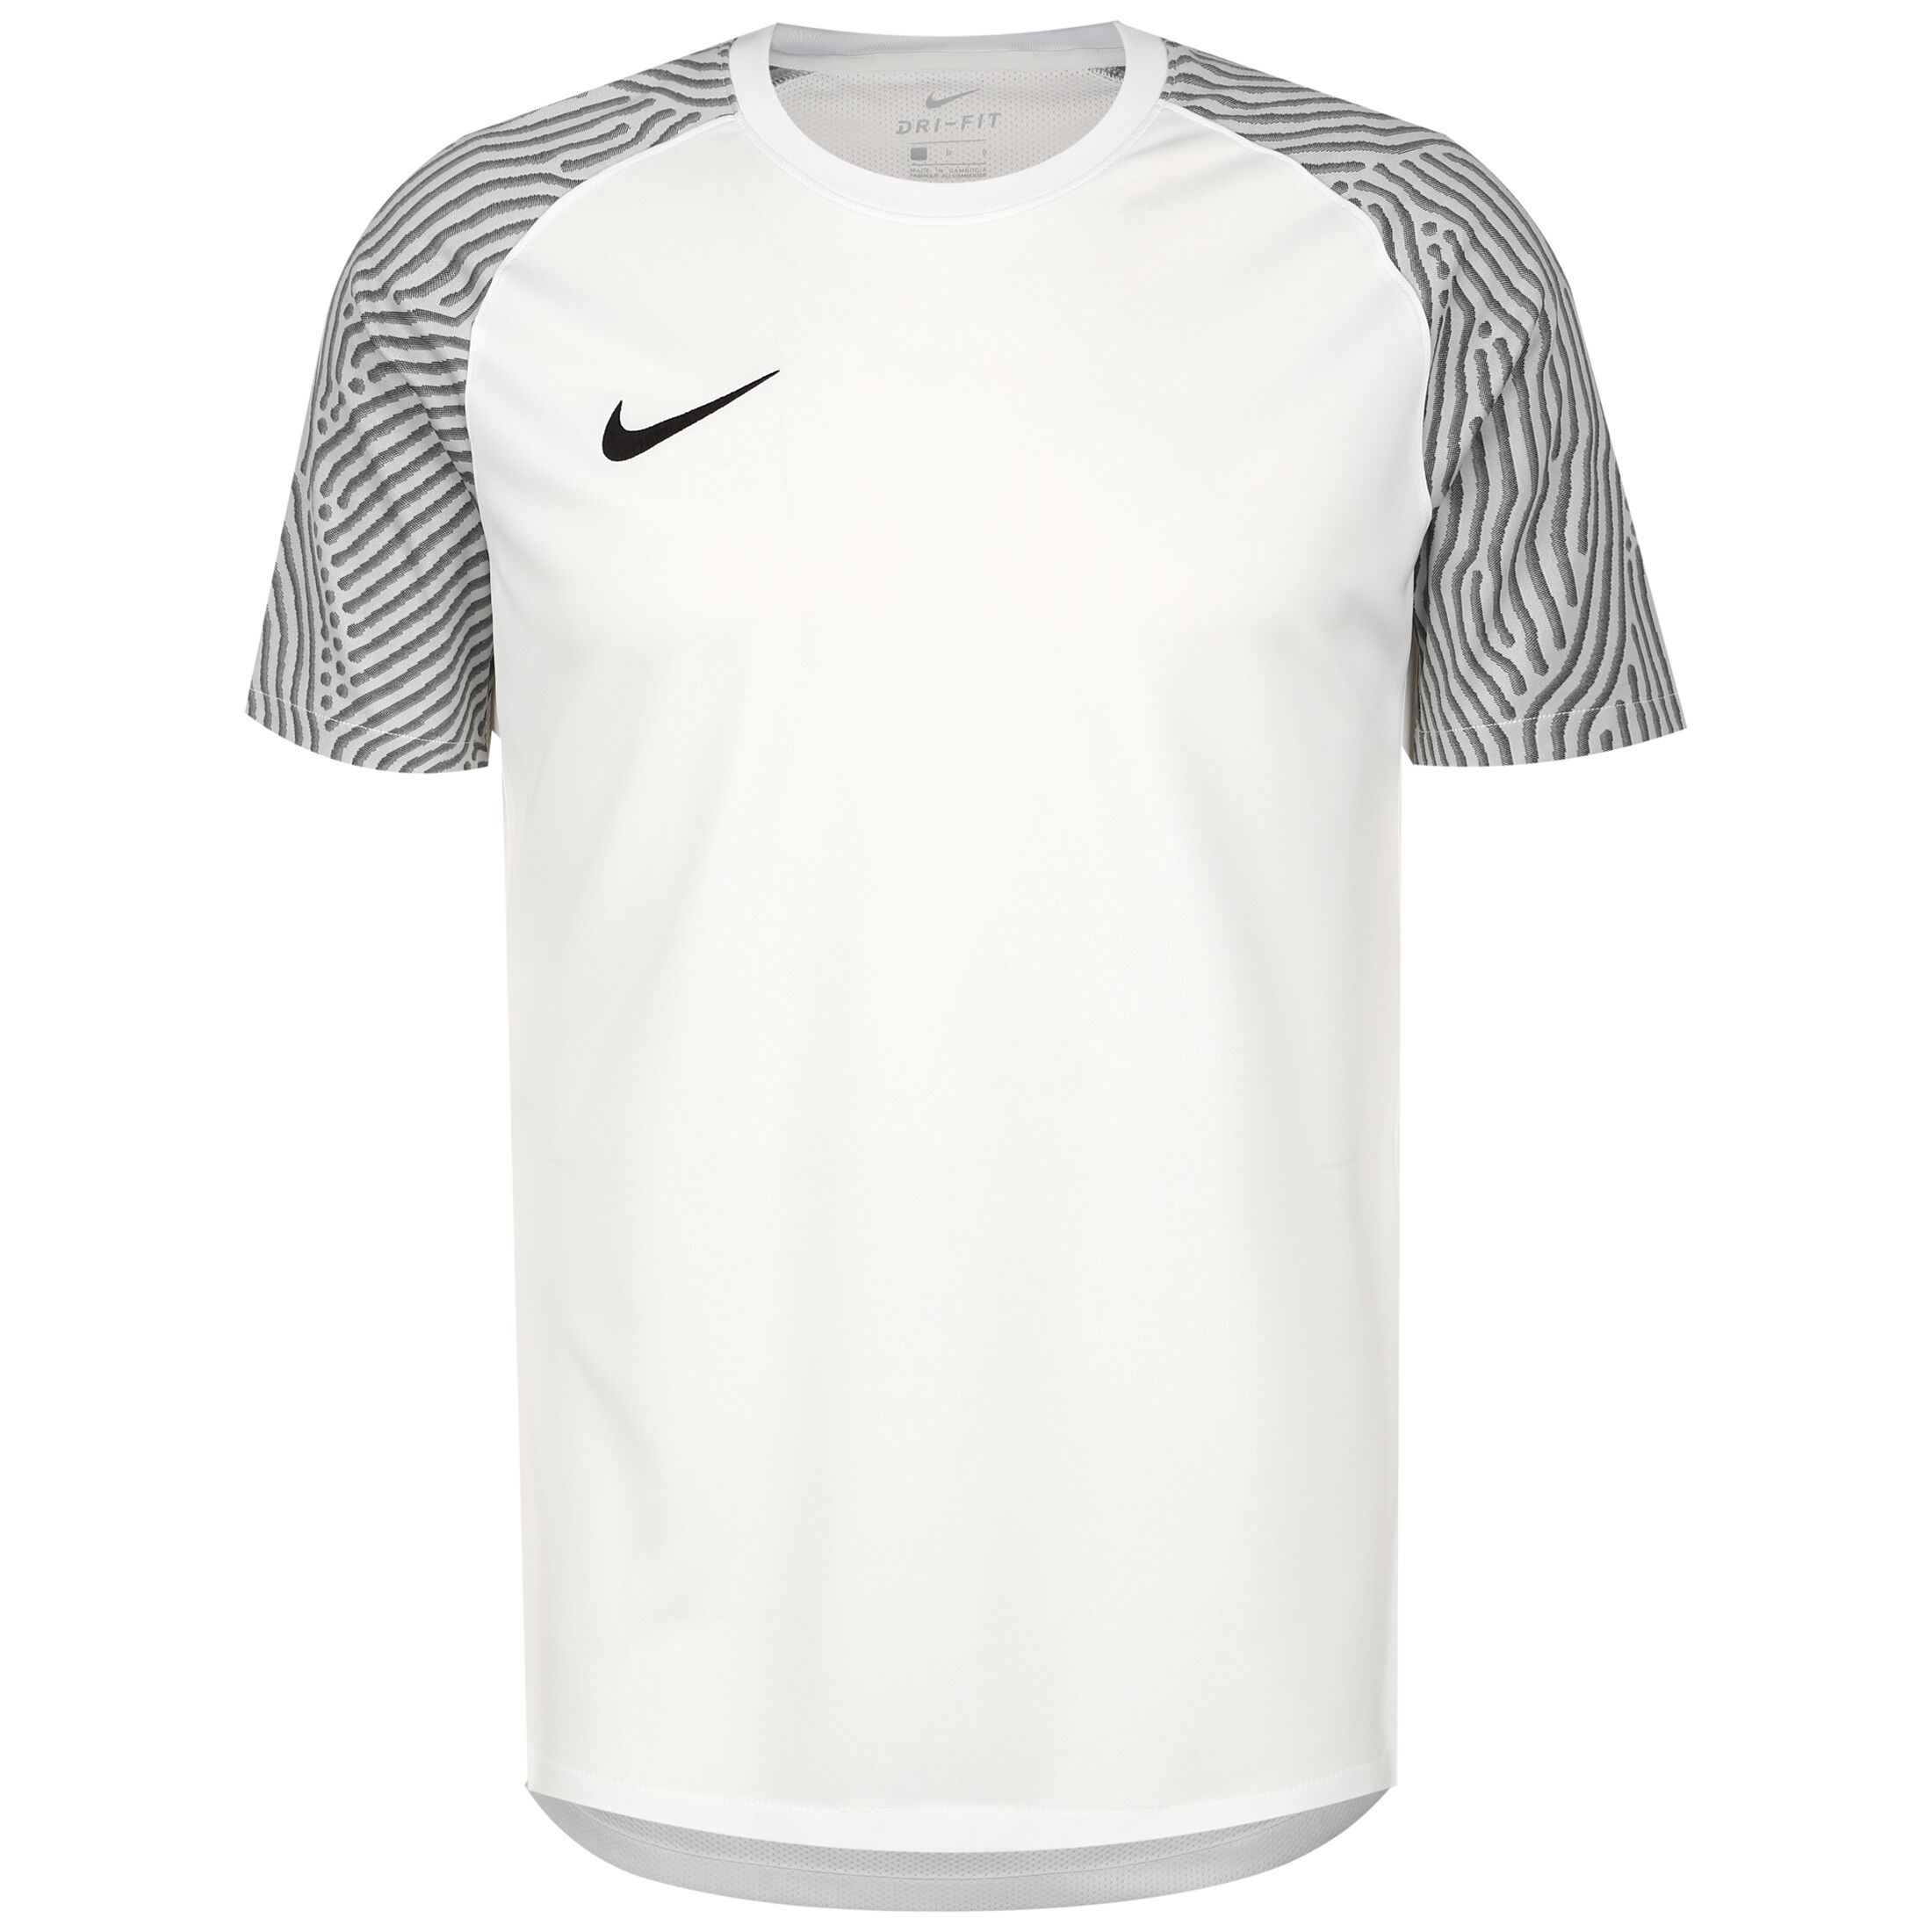 Рубашка Nike Fußballtrikot Strike II, белый футболка игровая подростковая nike strike ii cw3557 100